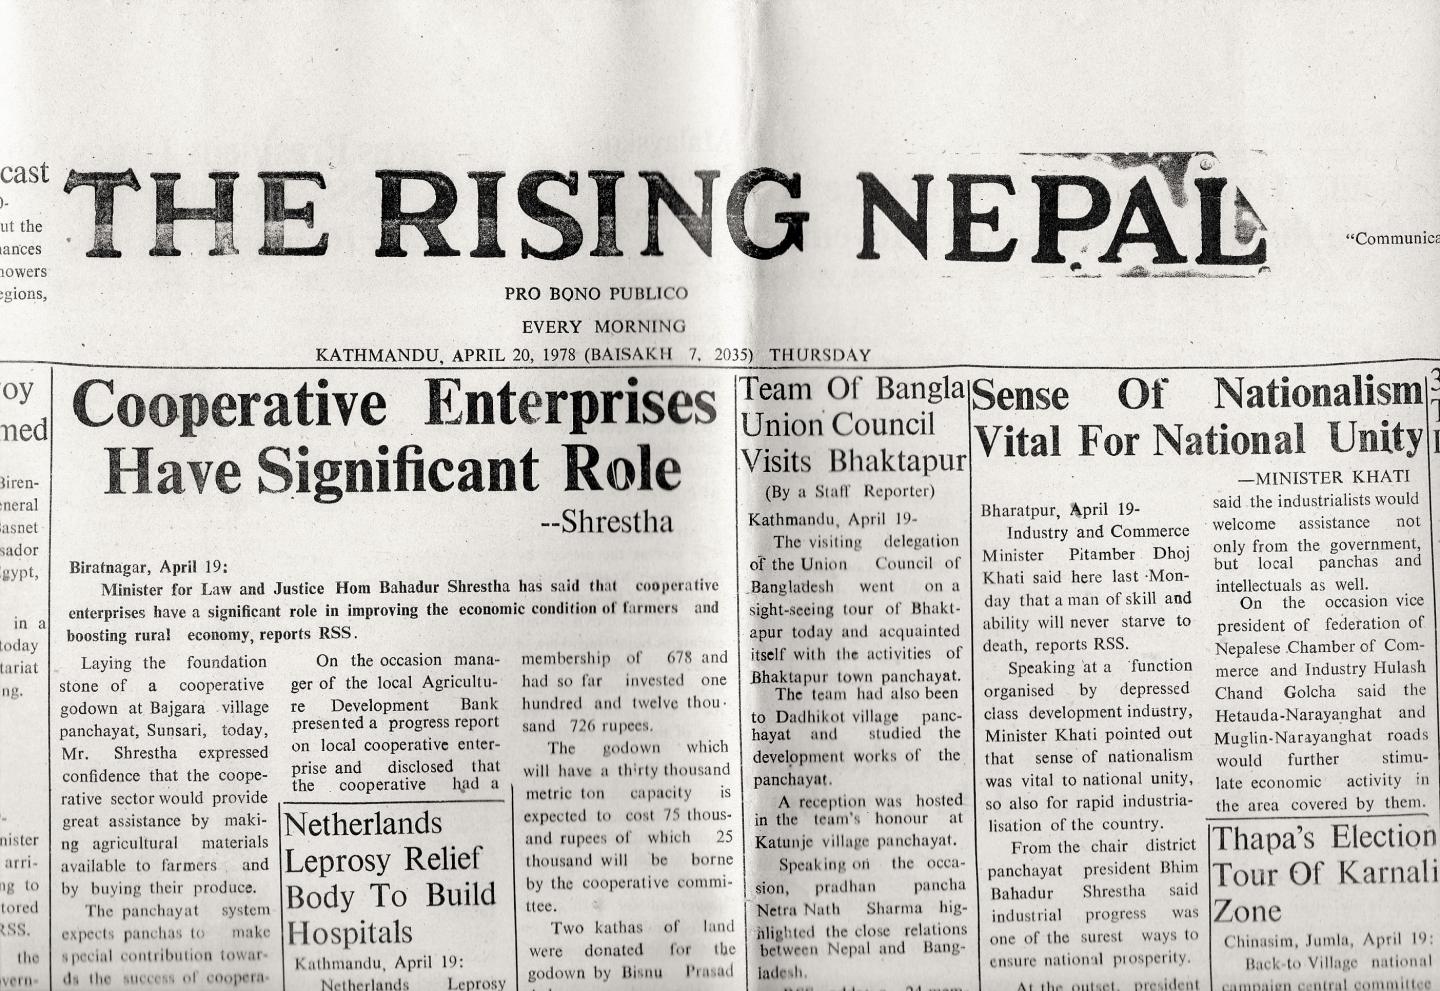 krant/dagblad - The Rising Nepal  -  Daily Morning Paper   Kathmandu  April 20th 1978